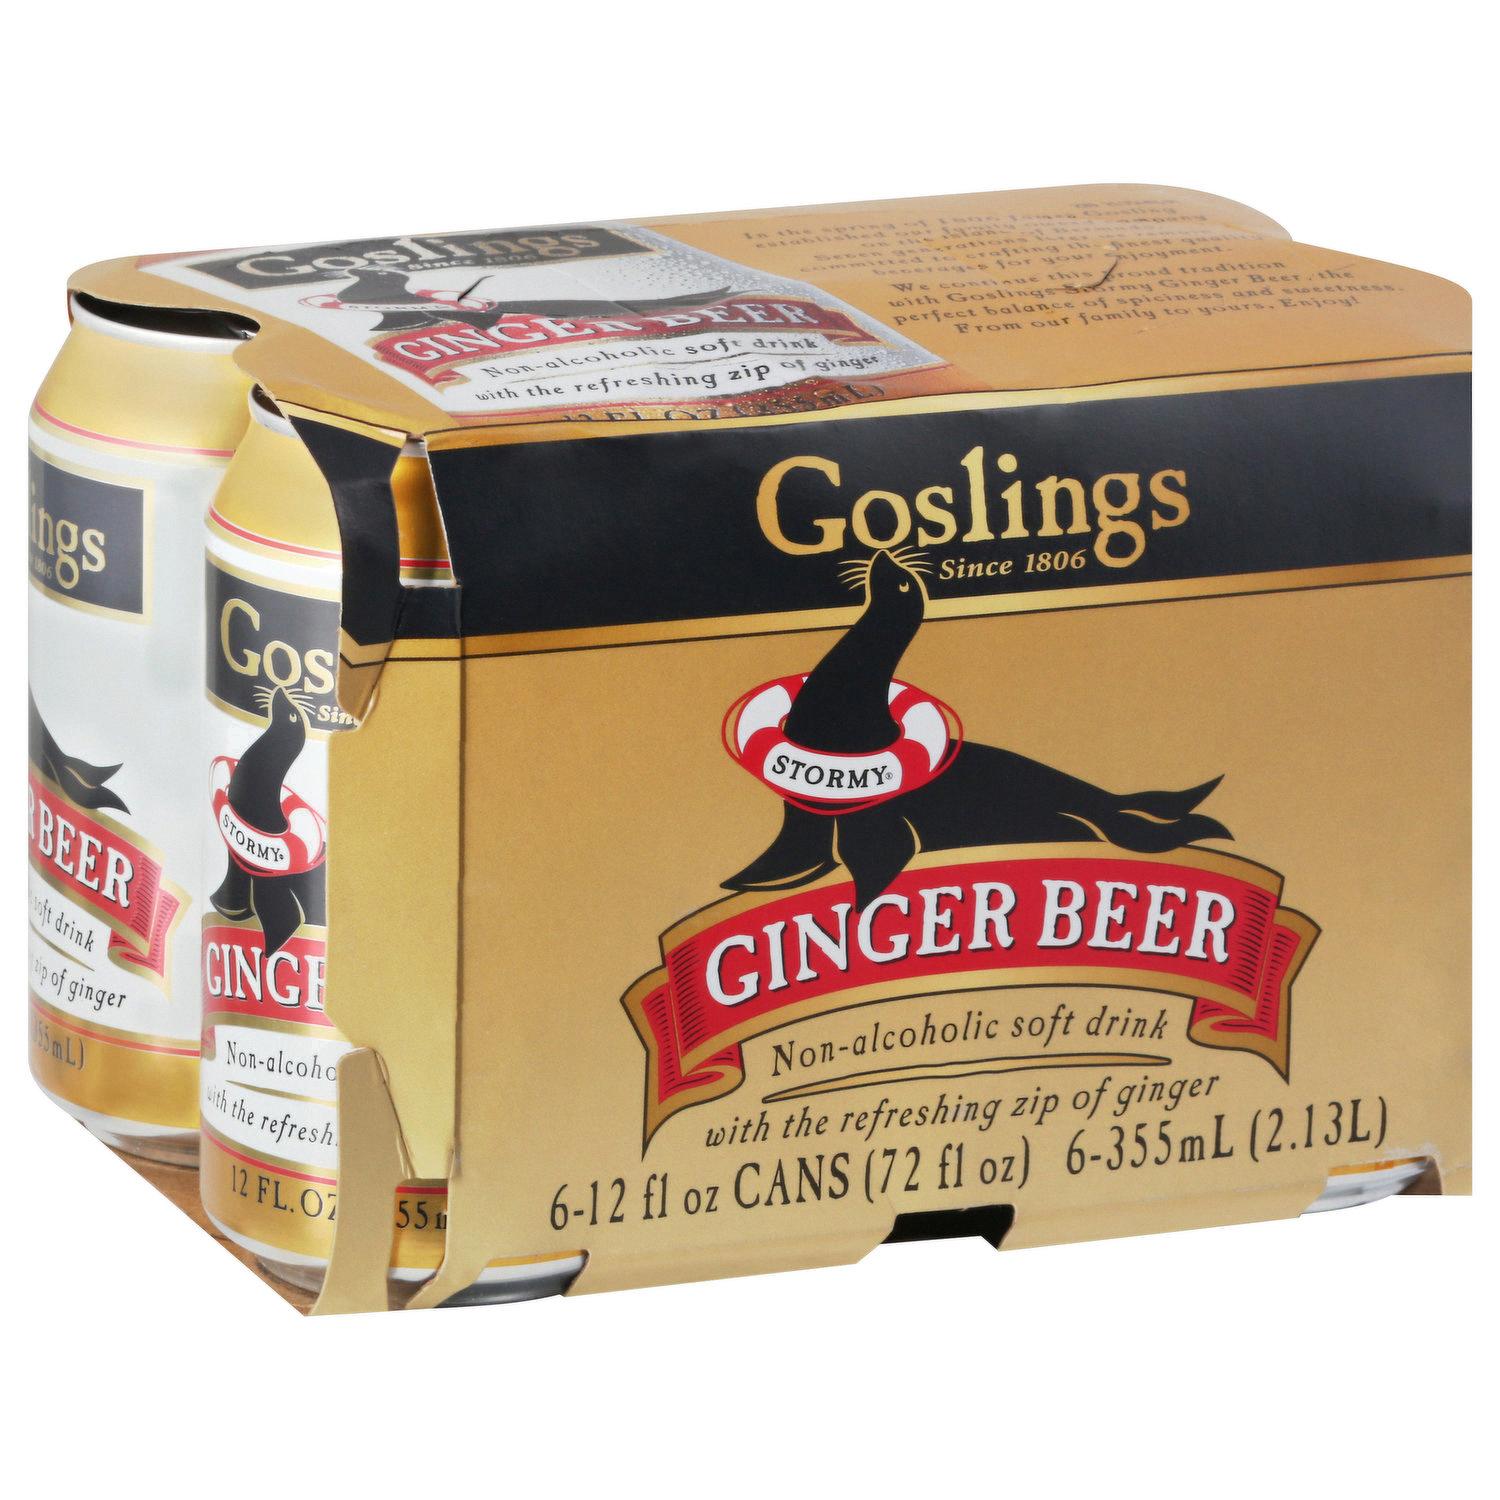 goslings ginger beer nutrition facts 2